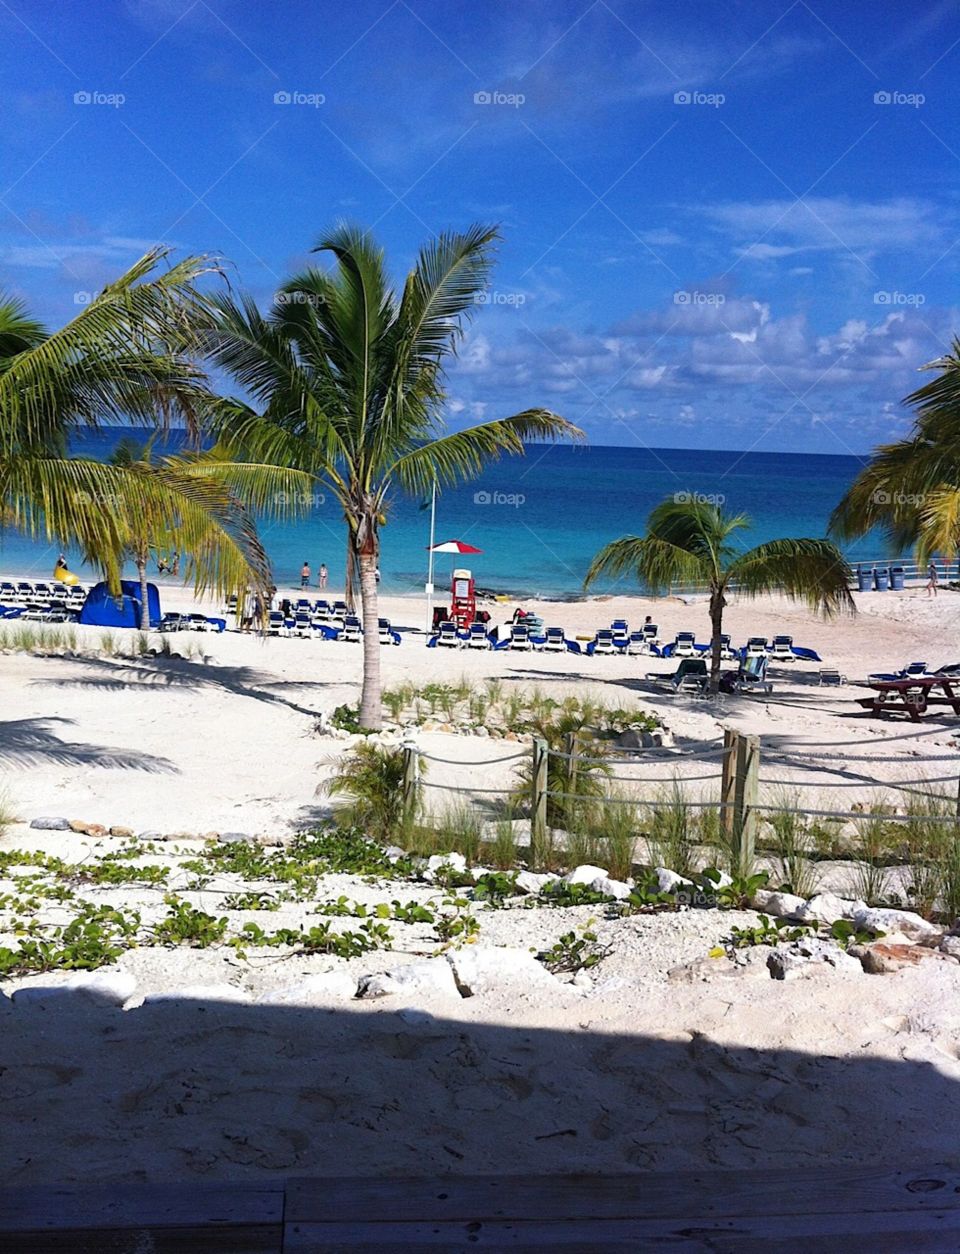 Great Stirrup Cay, Bahamas 🇧🇸 Norwegian cruiseline’s private island 🌴 